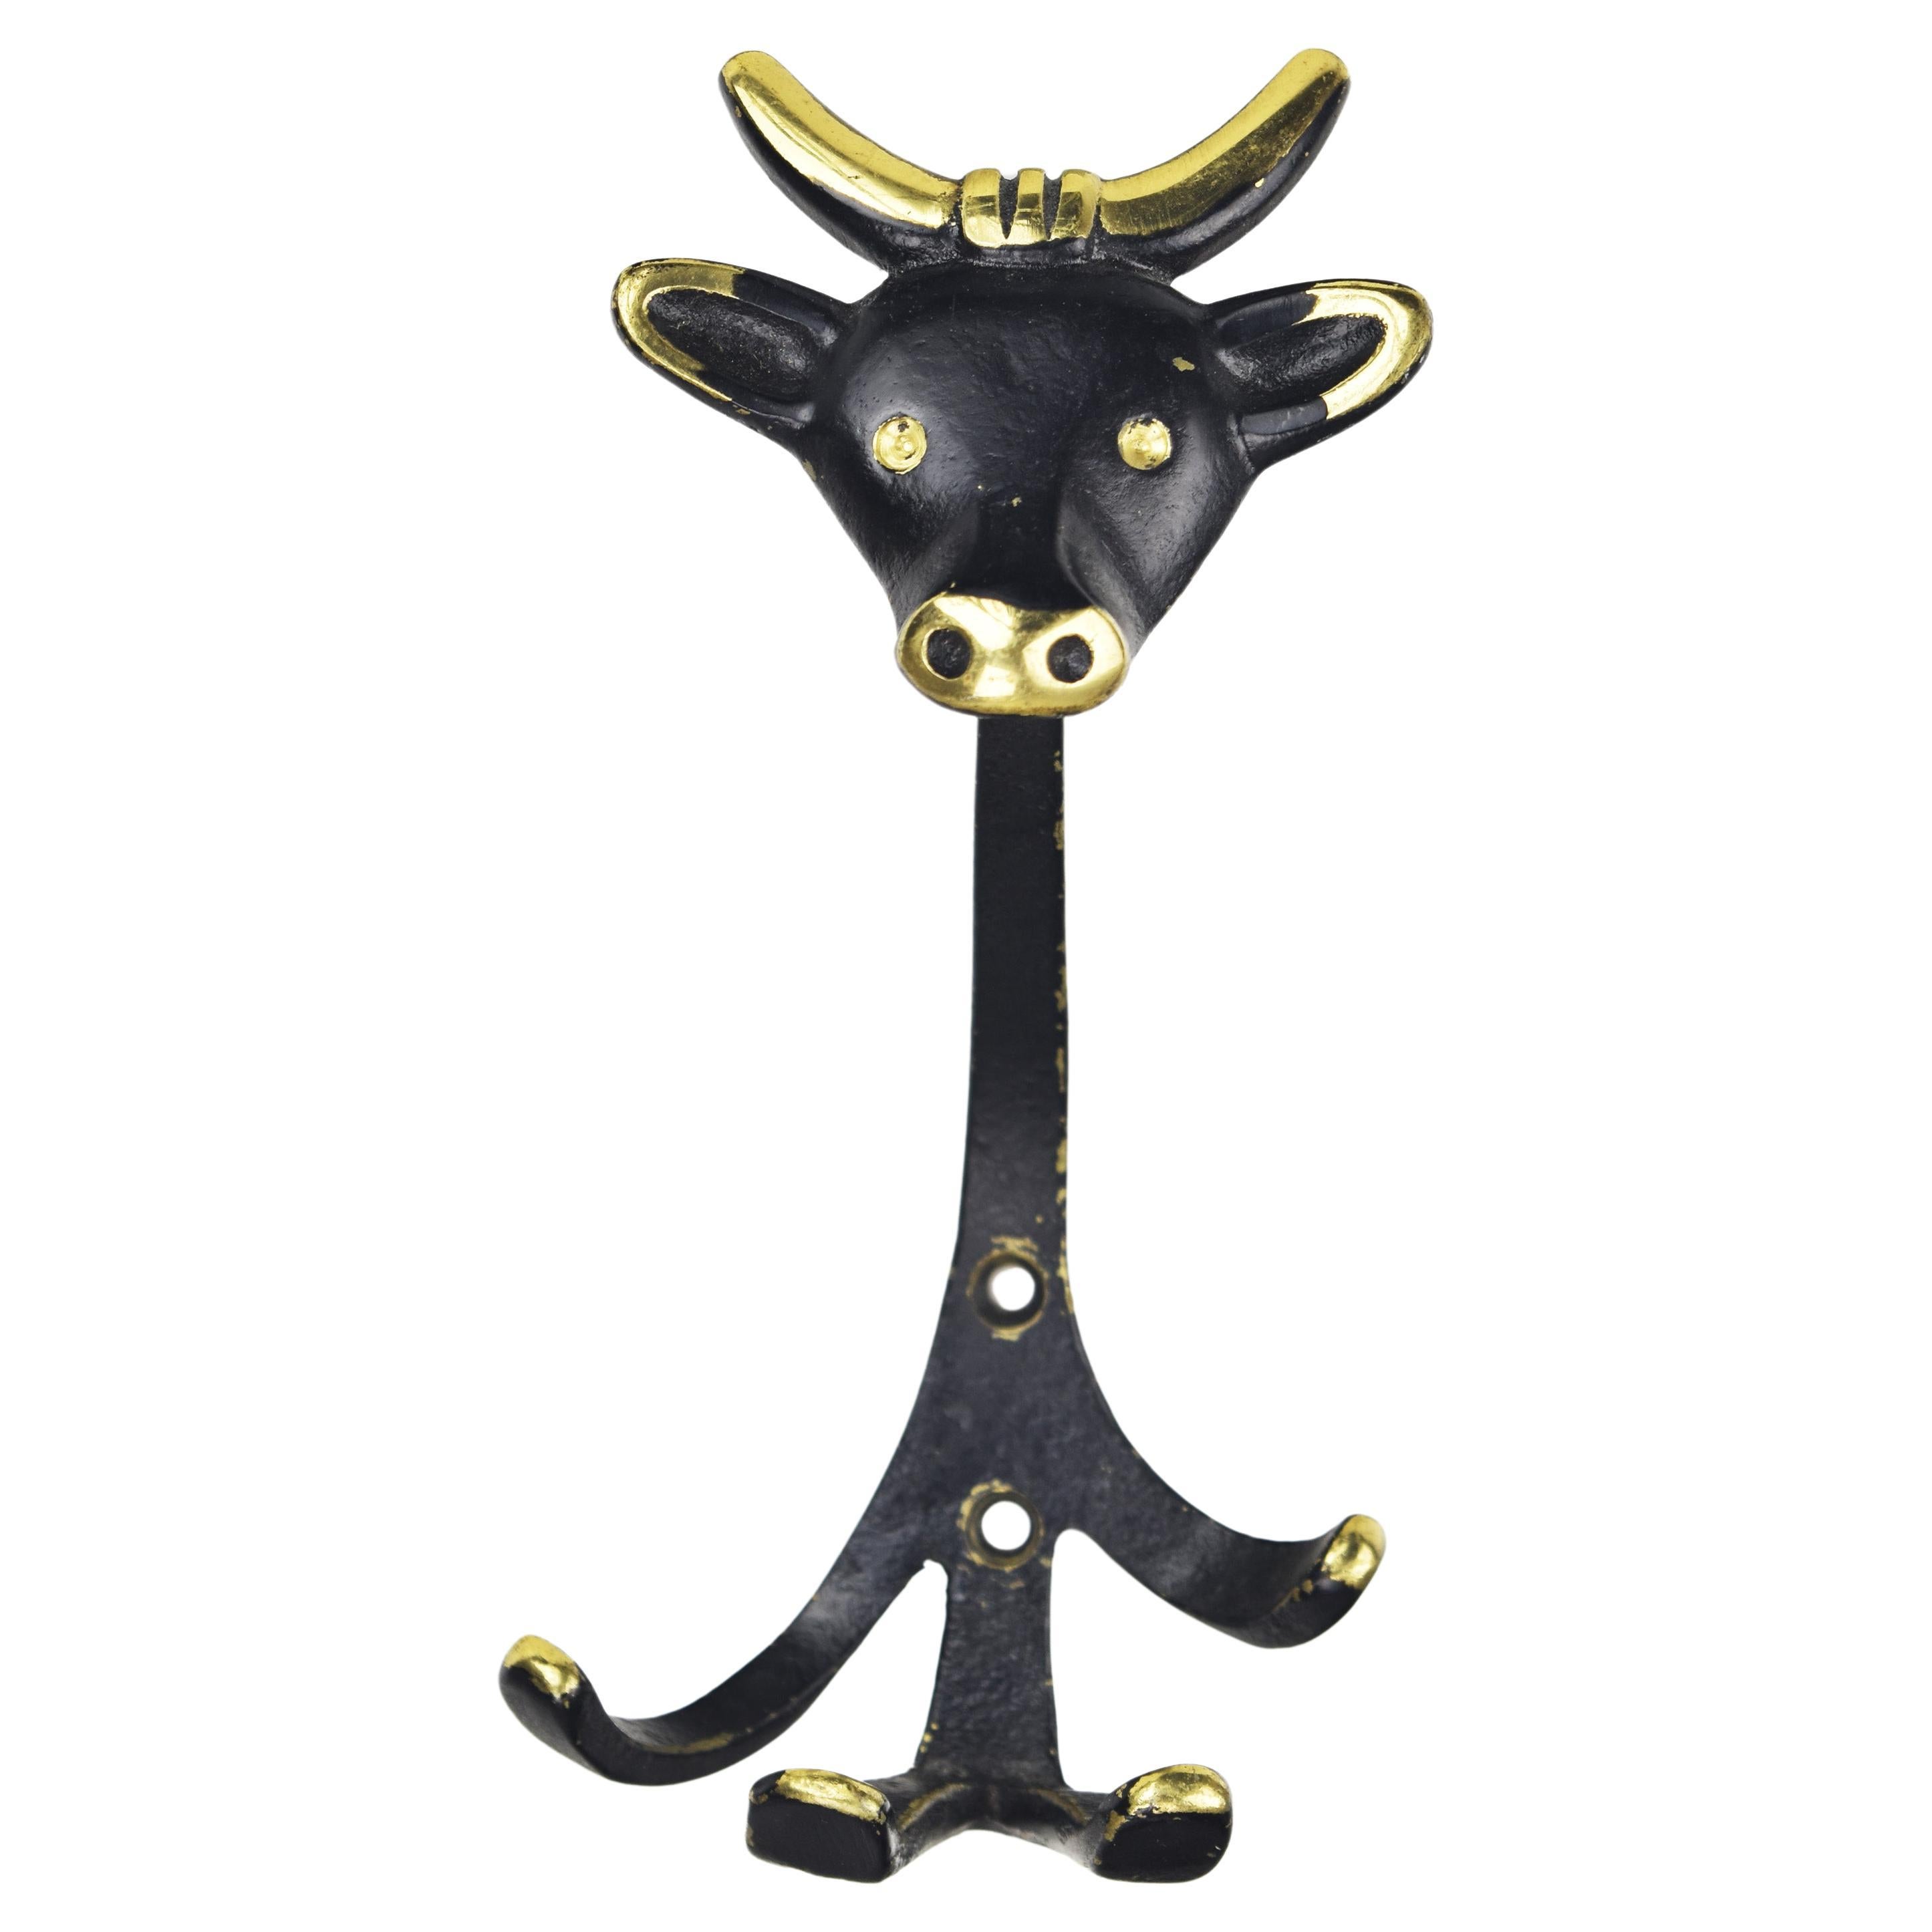 Figural Cow / Bull Coat Hook Walter Bosse Cast Brass / Bronze Mid Century Modern